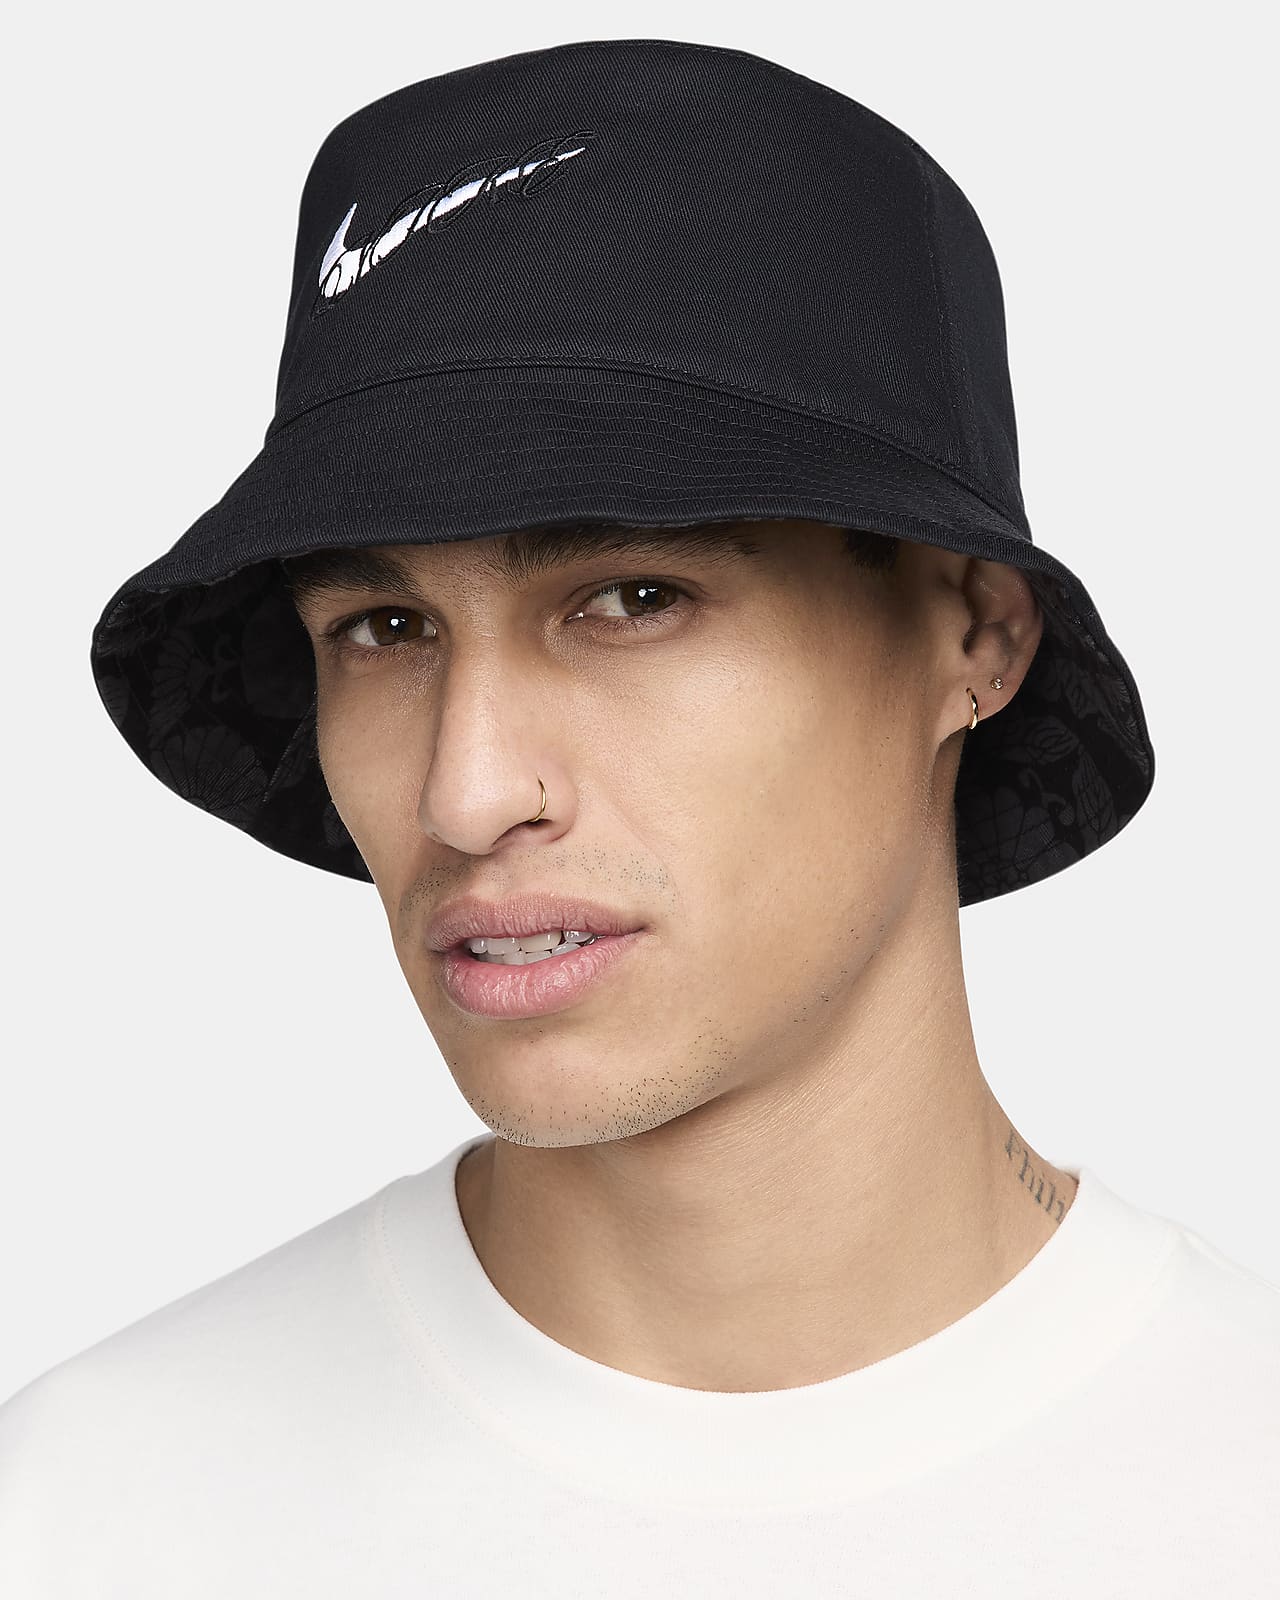 Nike SWOOSH PRINT BUCKET HAT Black - black